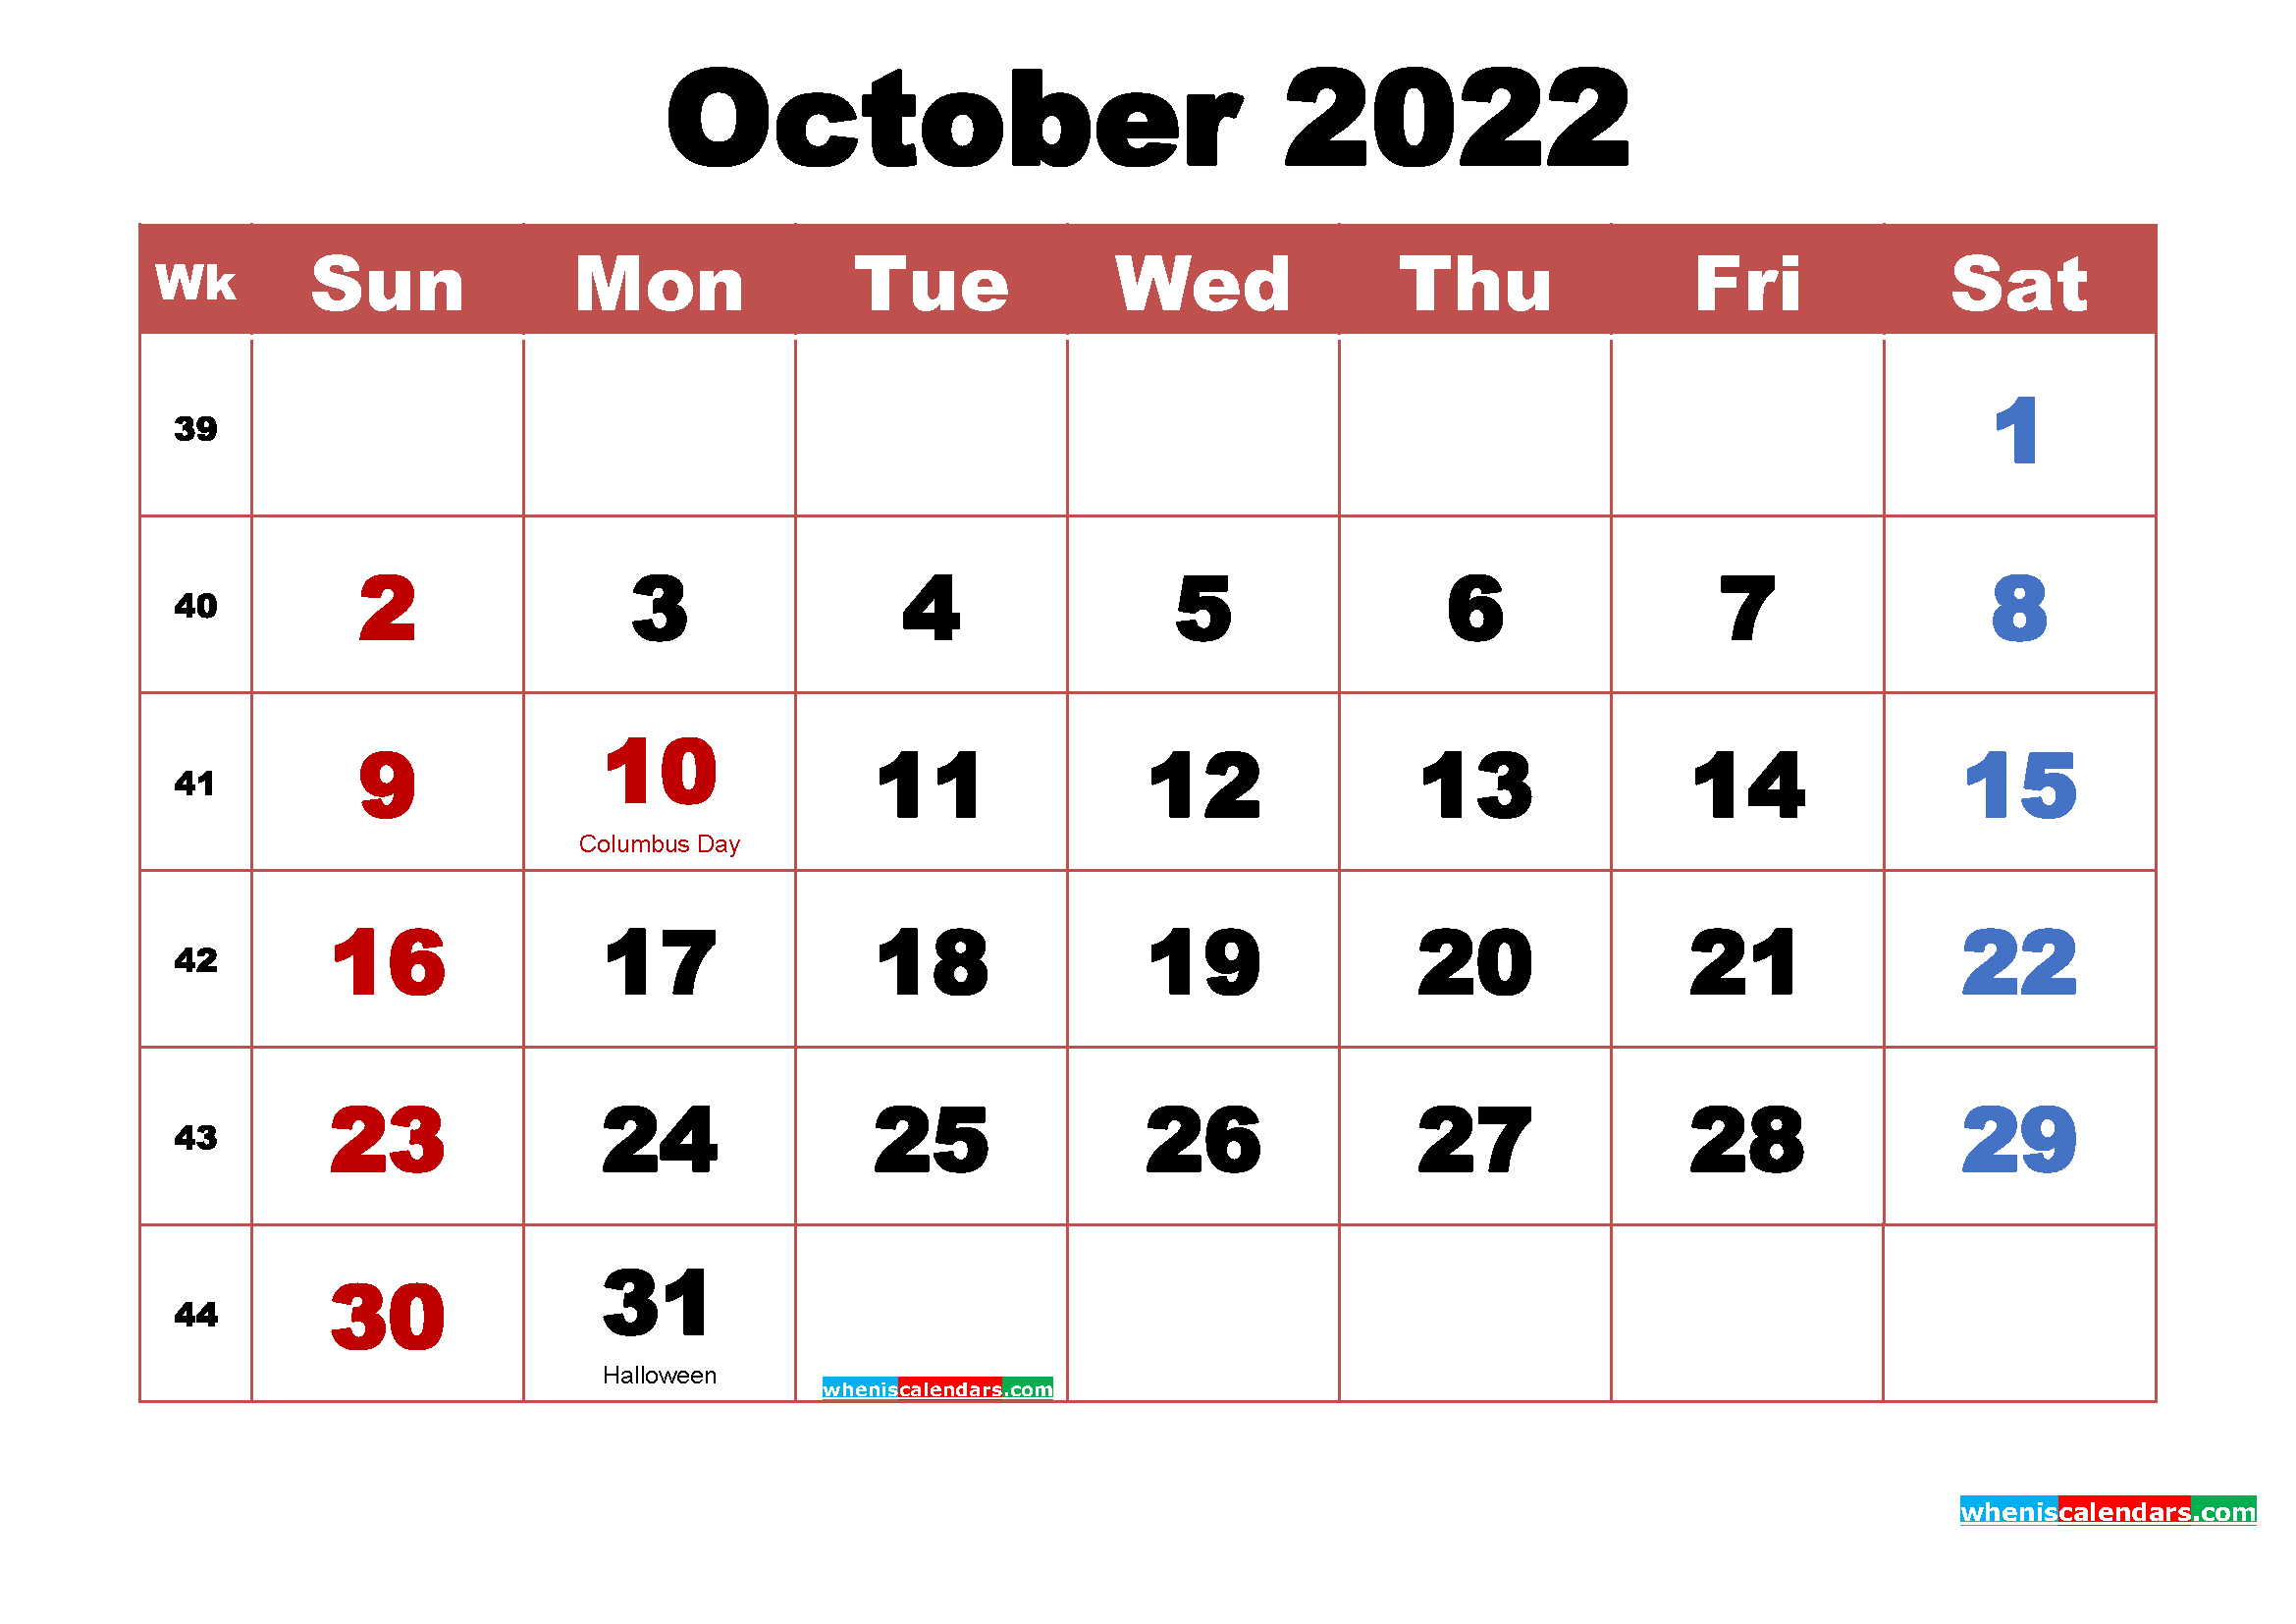 Catch Bengali Calendar 2022 October